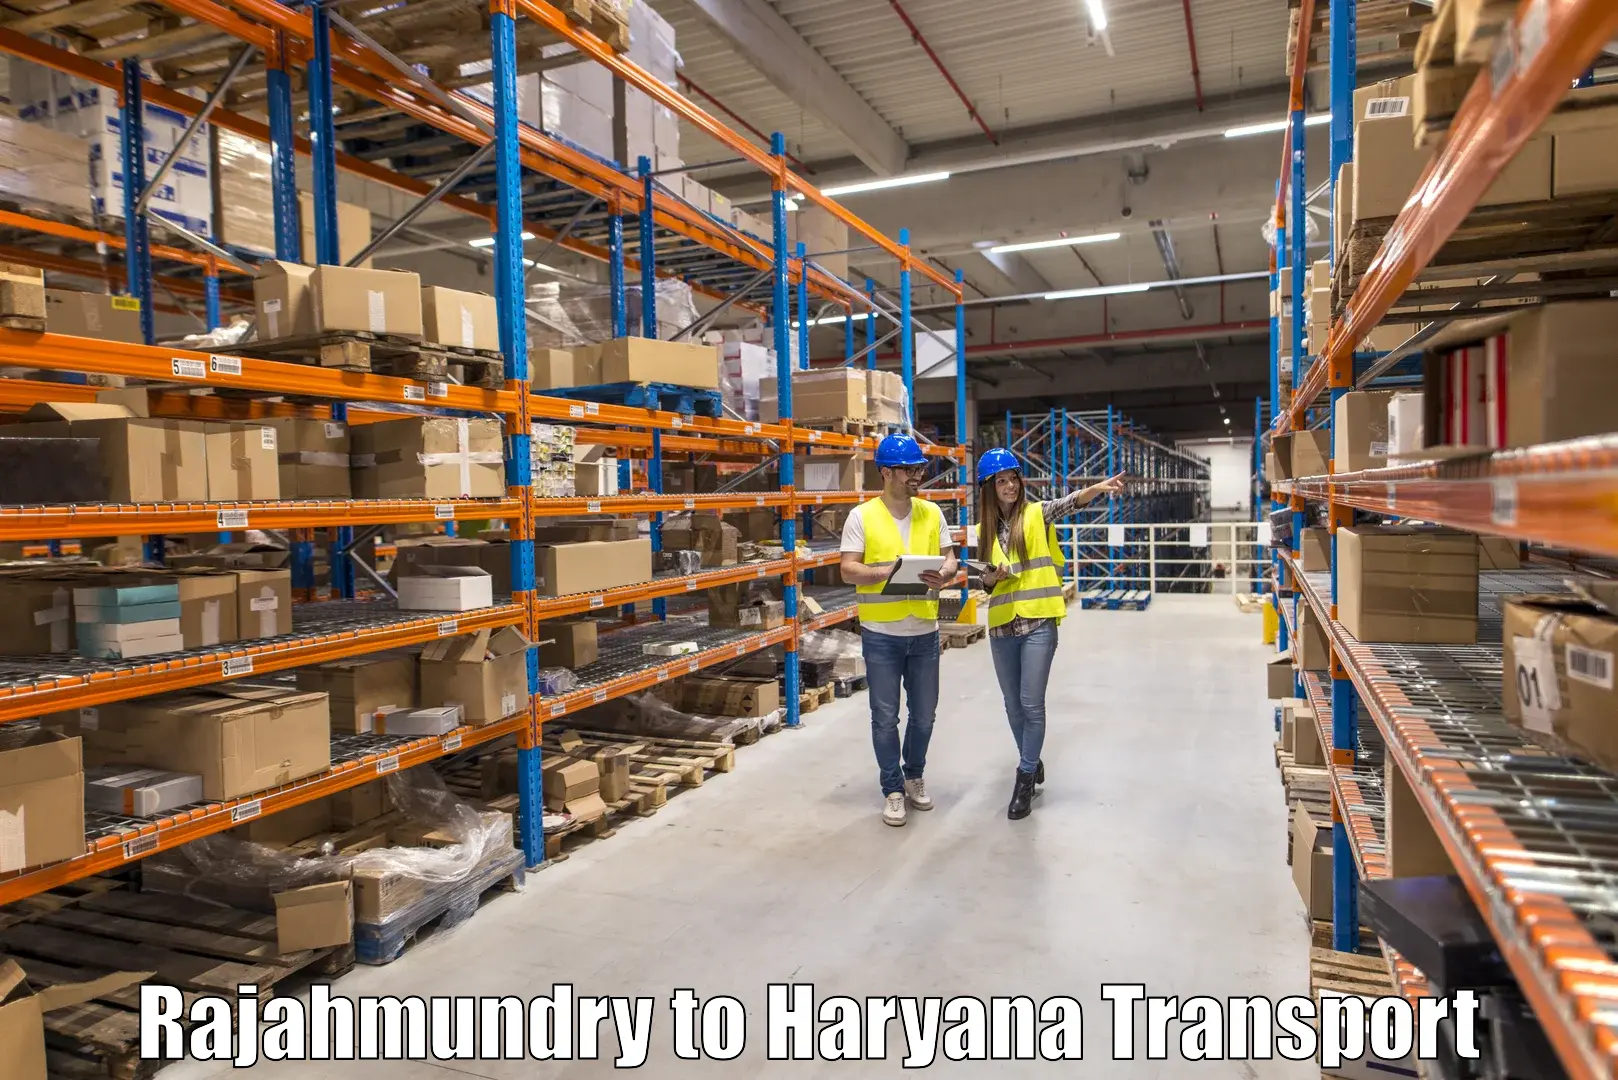 Shipping partner Rajahmundry to Sonipat